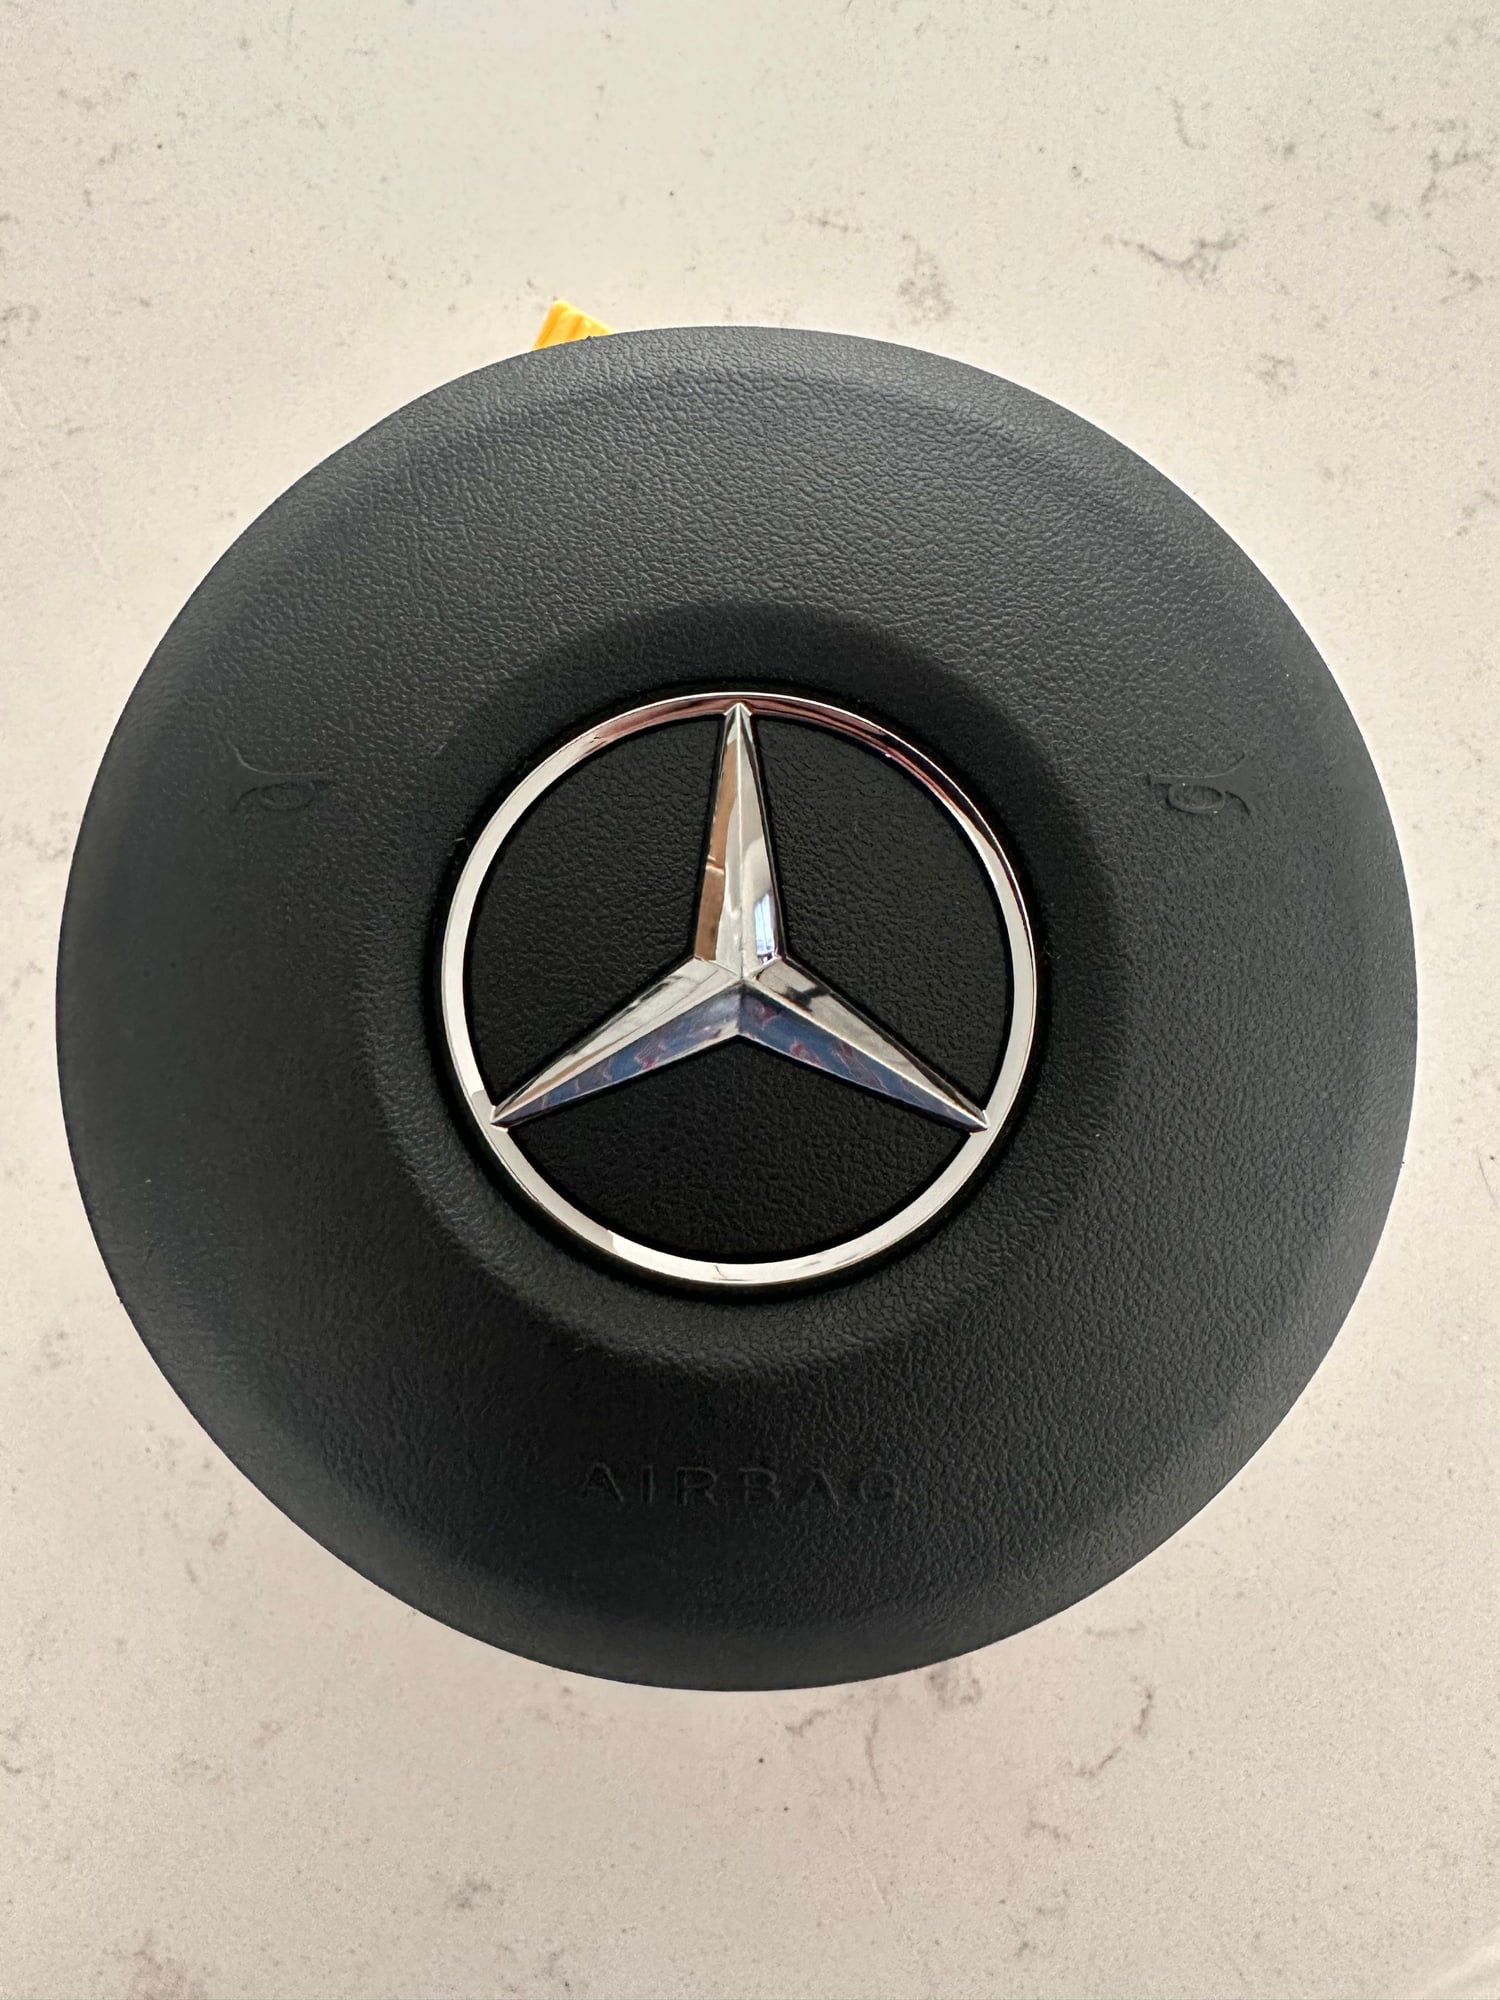 Steering/Suspension - Mercedes steering wheel airbag - New - Ann Arbor, MI 48103, United States